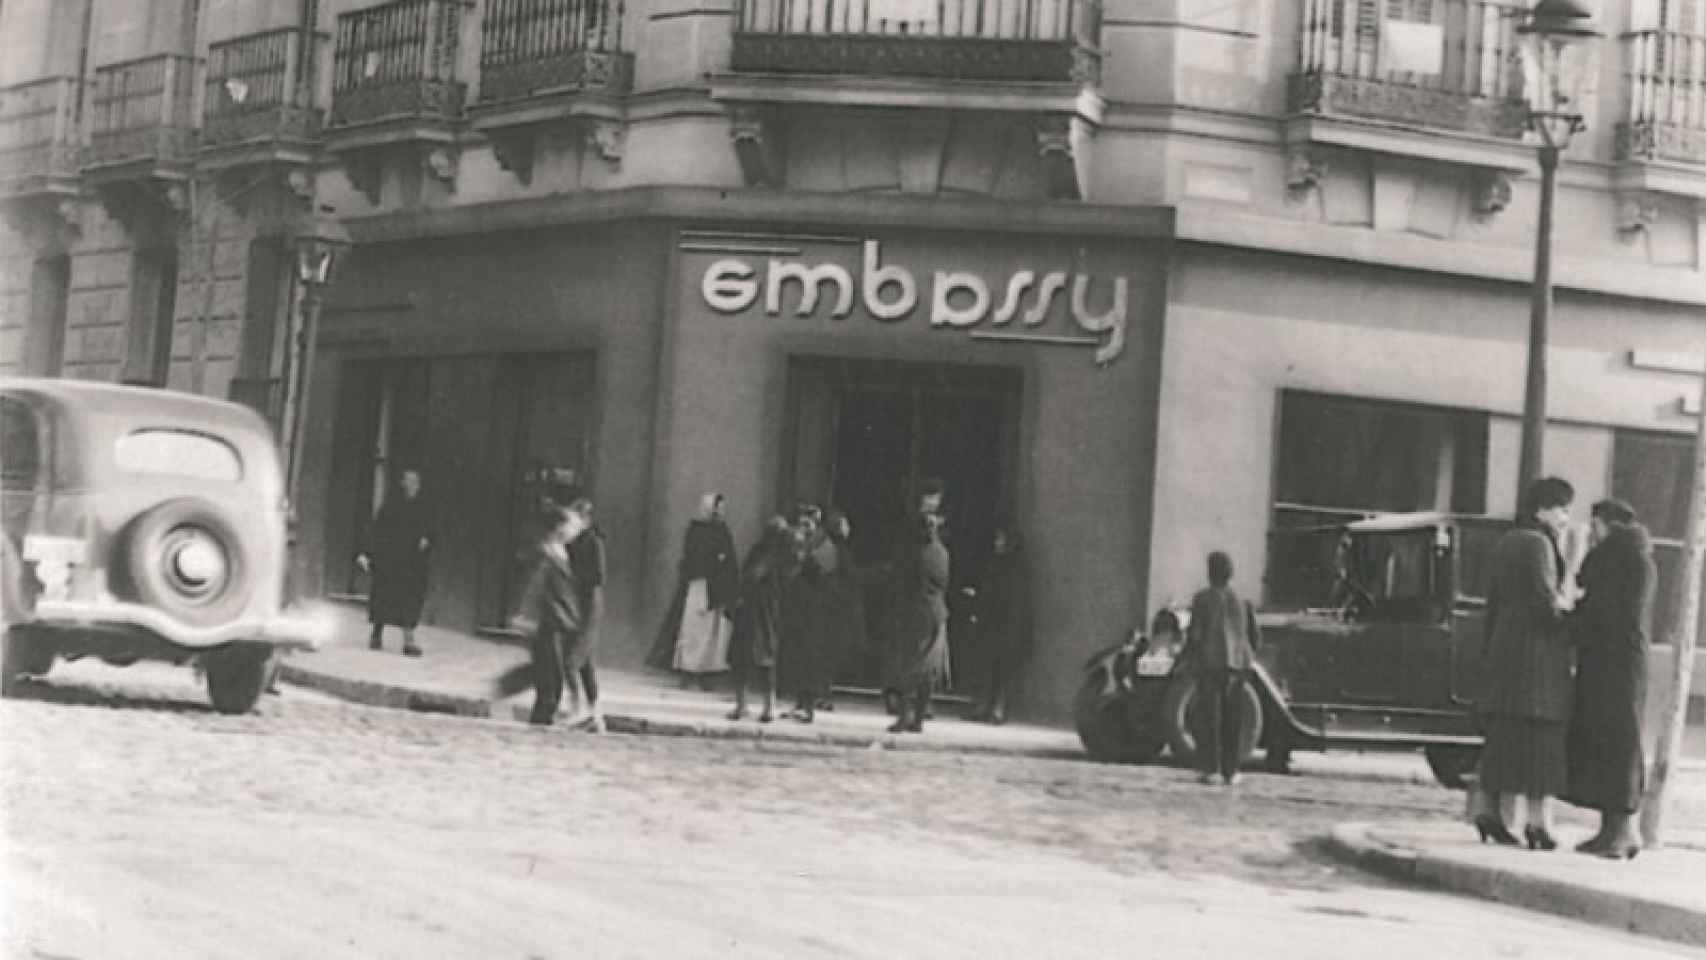 Adiós a Embassy, el mítico salón de té de Madrid